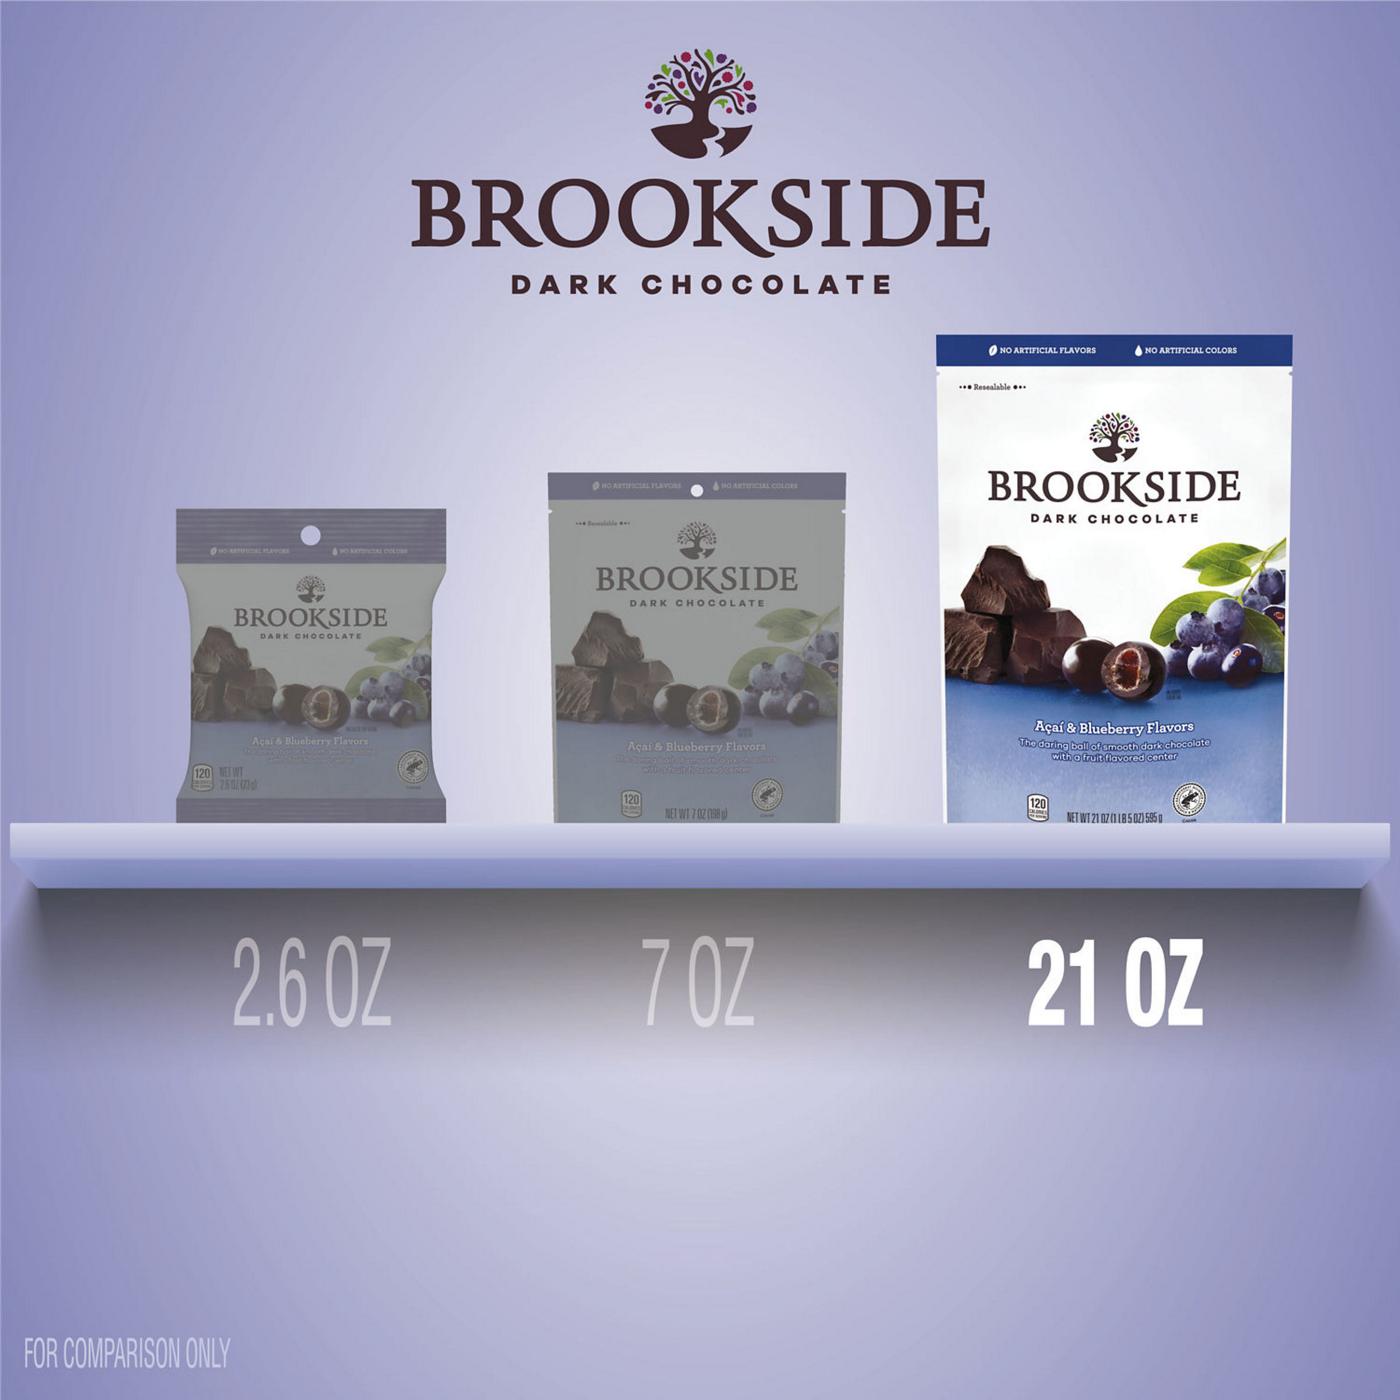 Brookside Dark Chocolate Acai & Blueberry Flavored Snacking Chocolate Bag; image 2 of 2